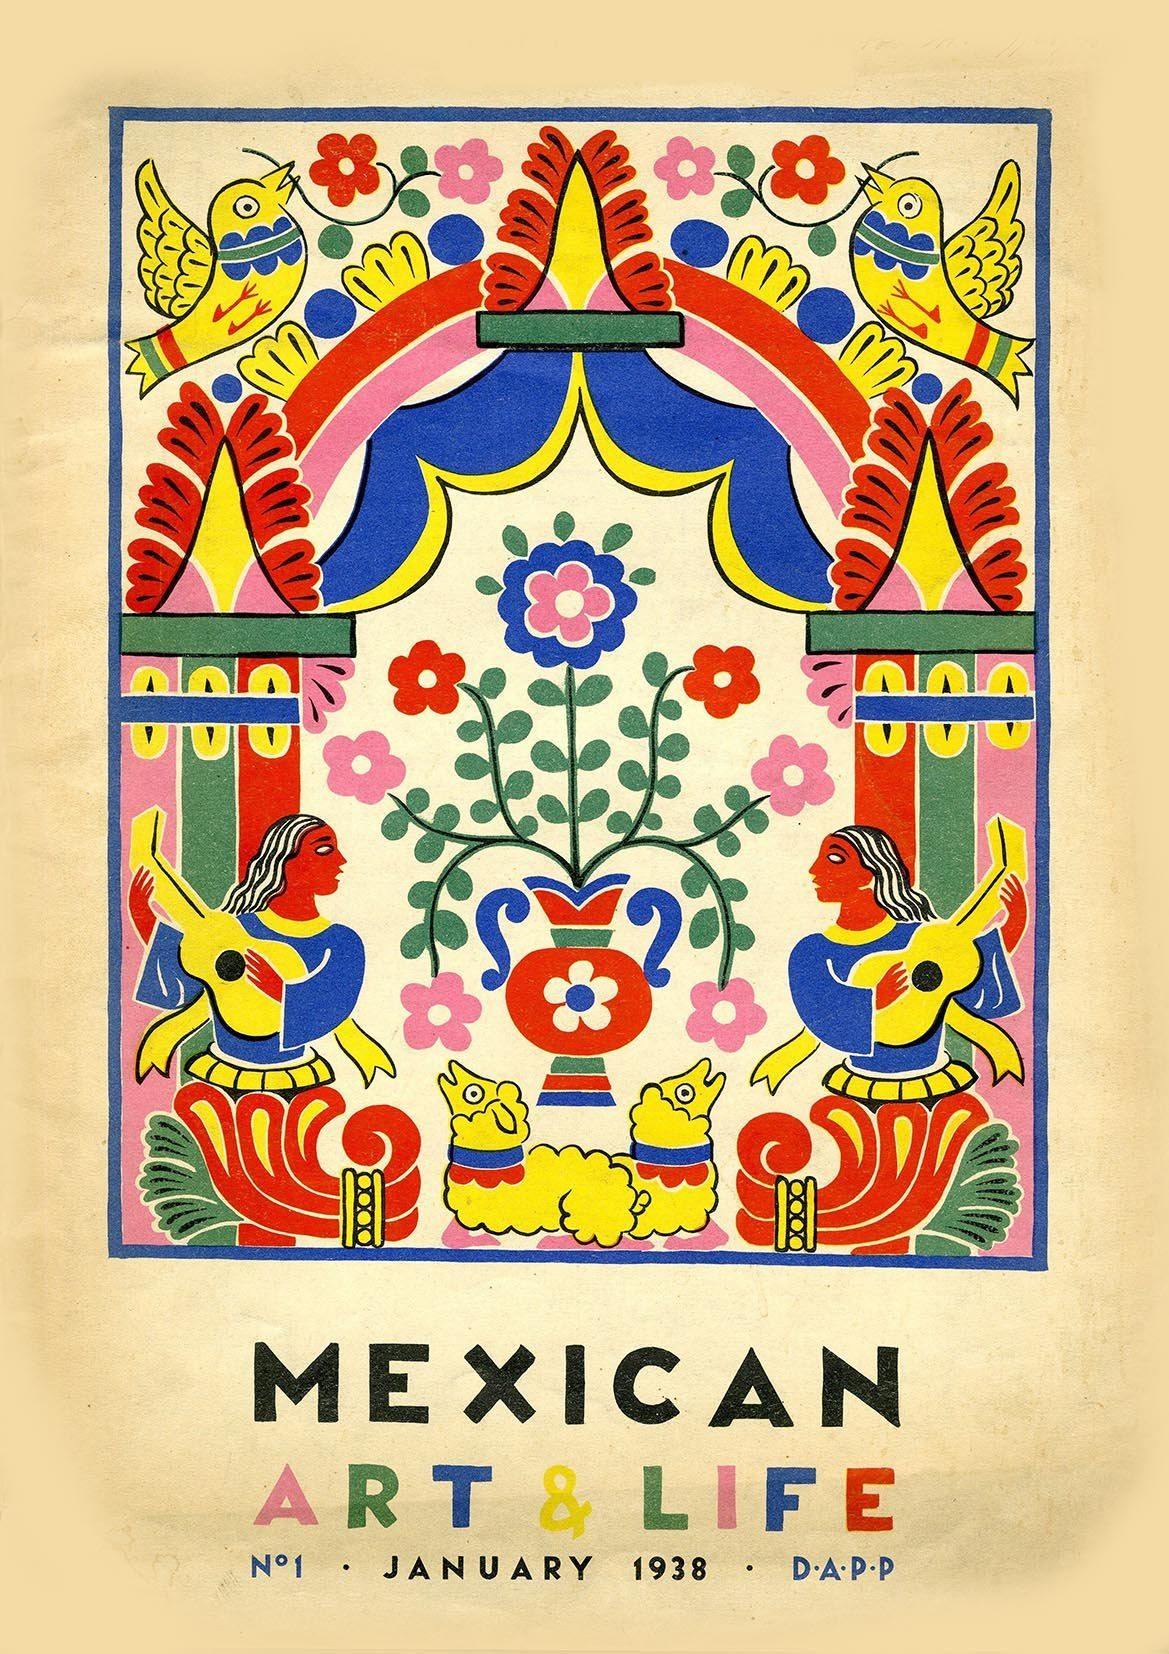 ART & LIFE POSTER: 1930s Mexican Magazine Cover Collage Print - Pimlico Prints